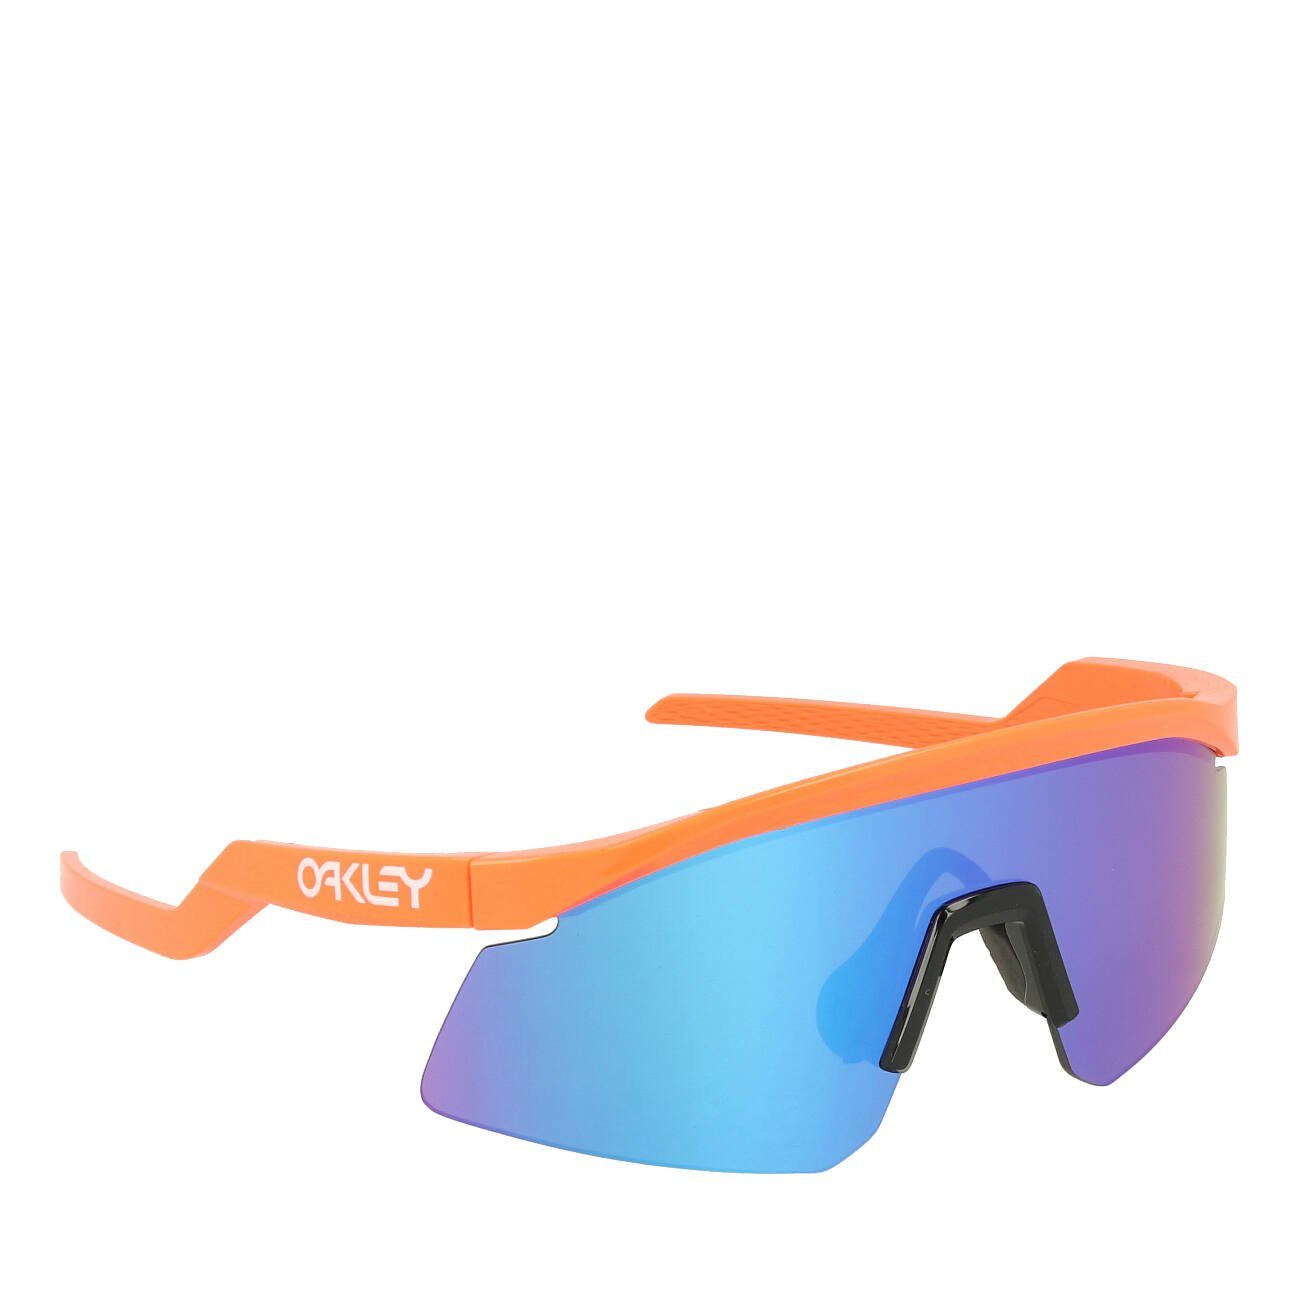 Oakley Oakley Orange Prizm Sportbrille Neon Sonnenbrille Hydra Sapphire